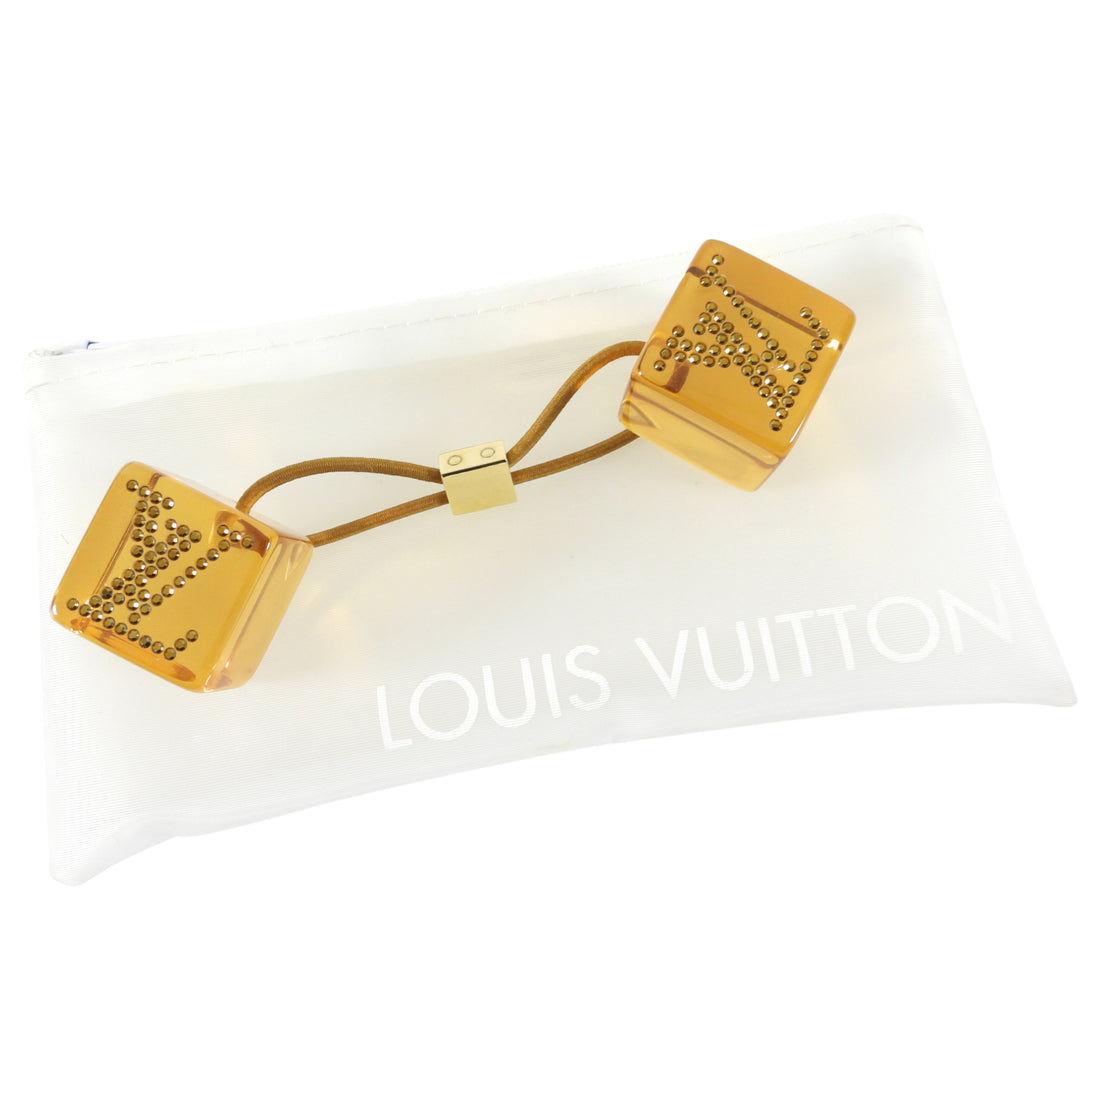 Louis Vuitton Acrylic Rhinestone Cube Hair Ties Set